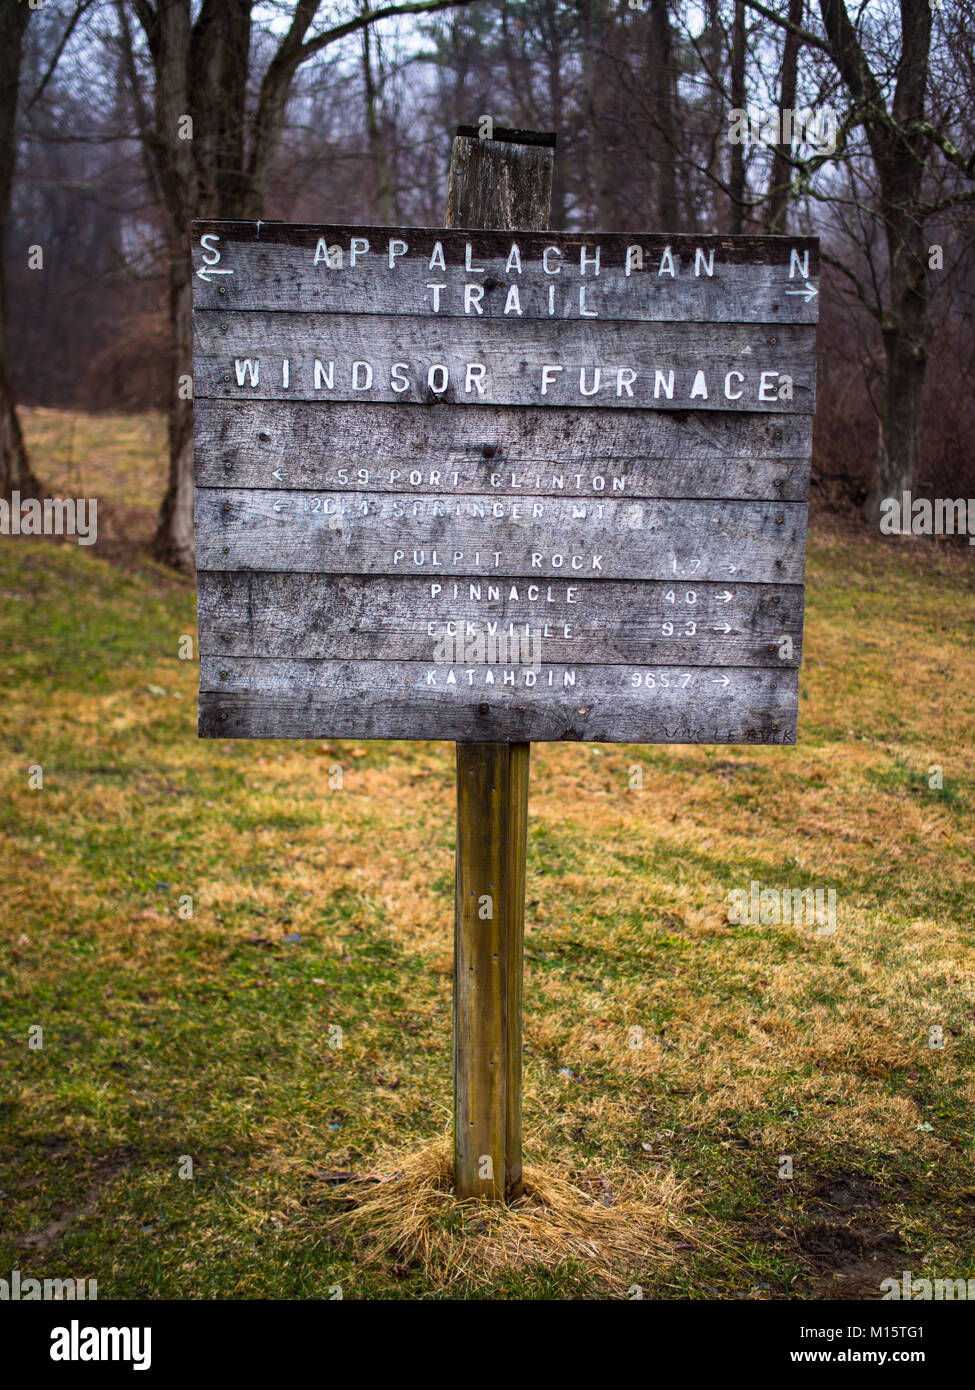 Appalachian Trail Wooden Sign Windsor Furnace Stock Photo